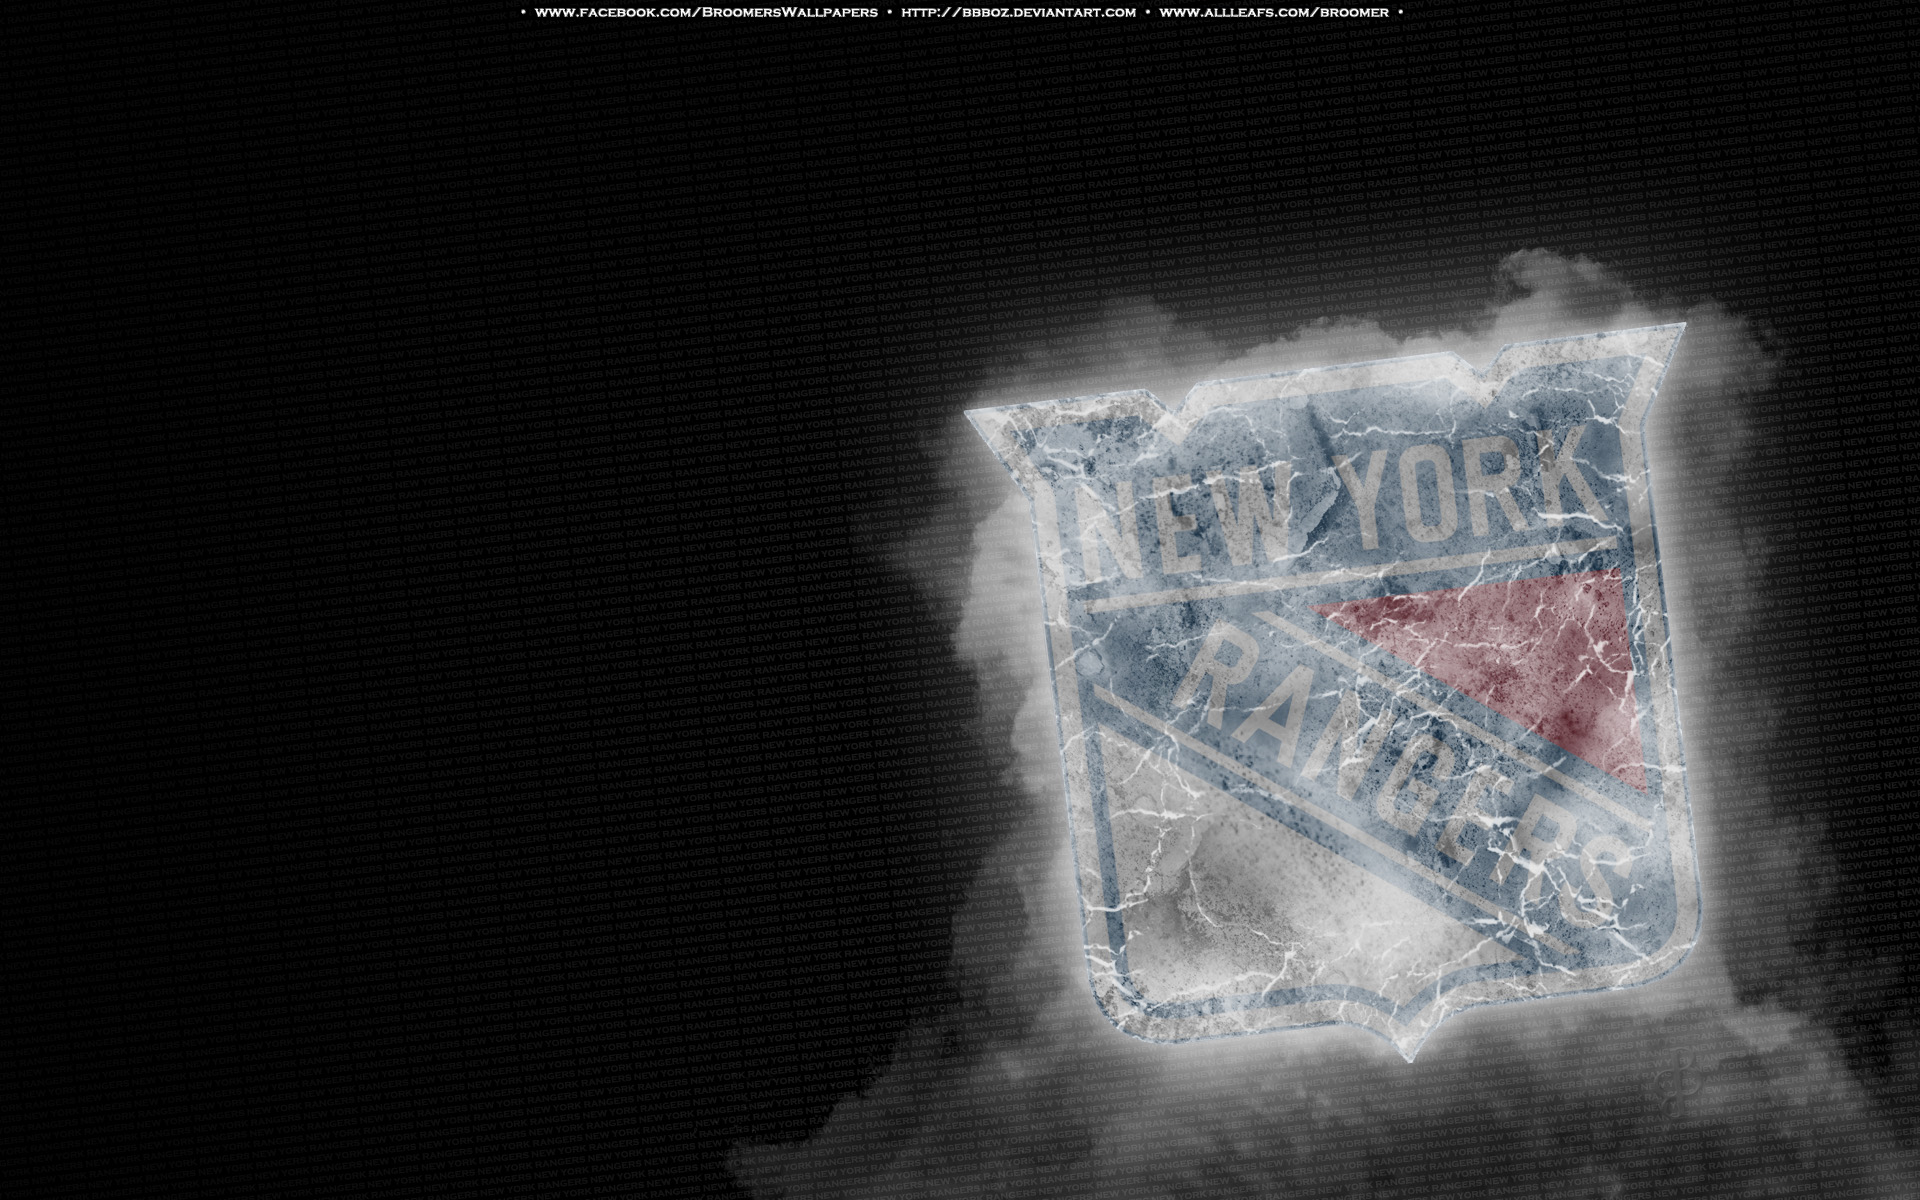 New York Rangers HD Wallpaper Background Image 1920x1200 ID